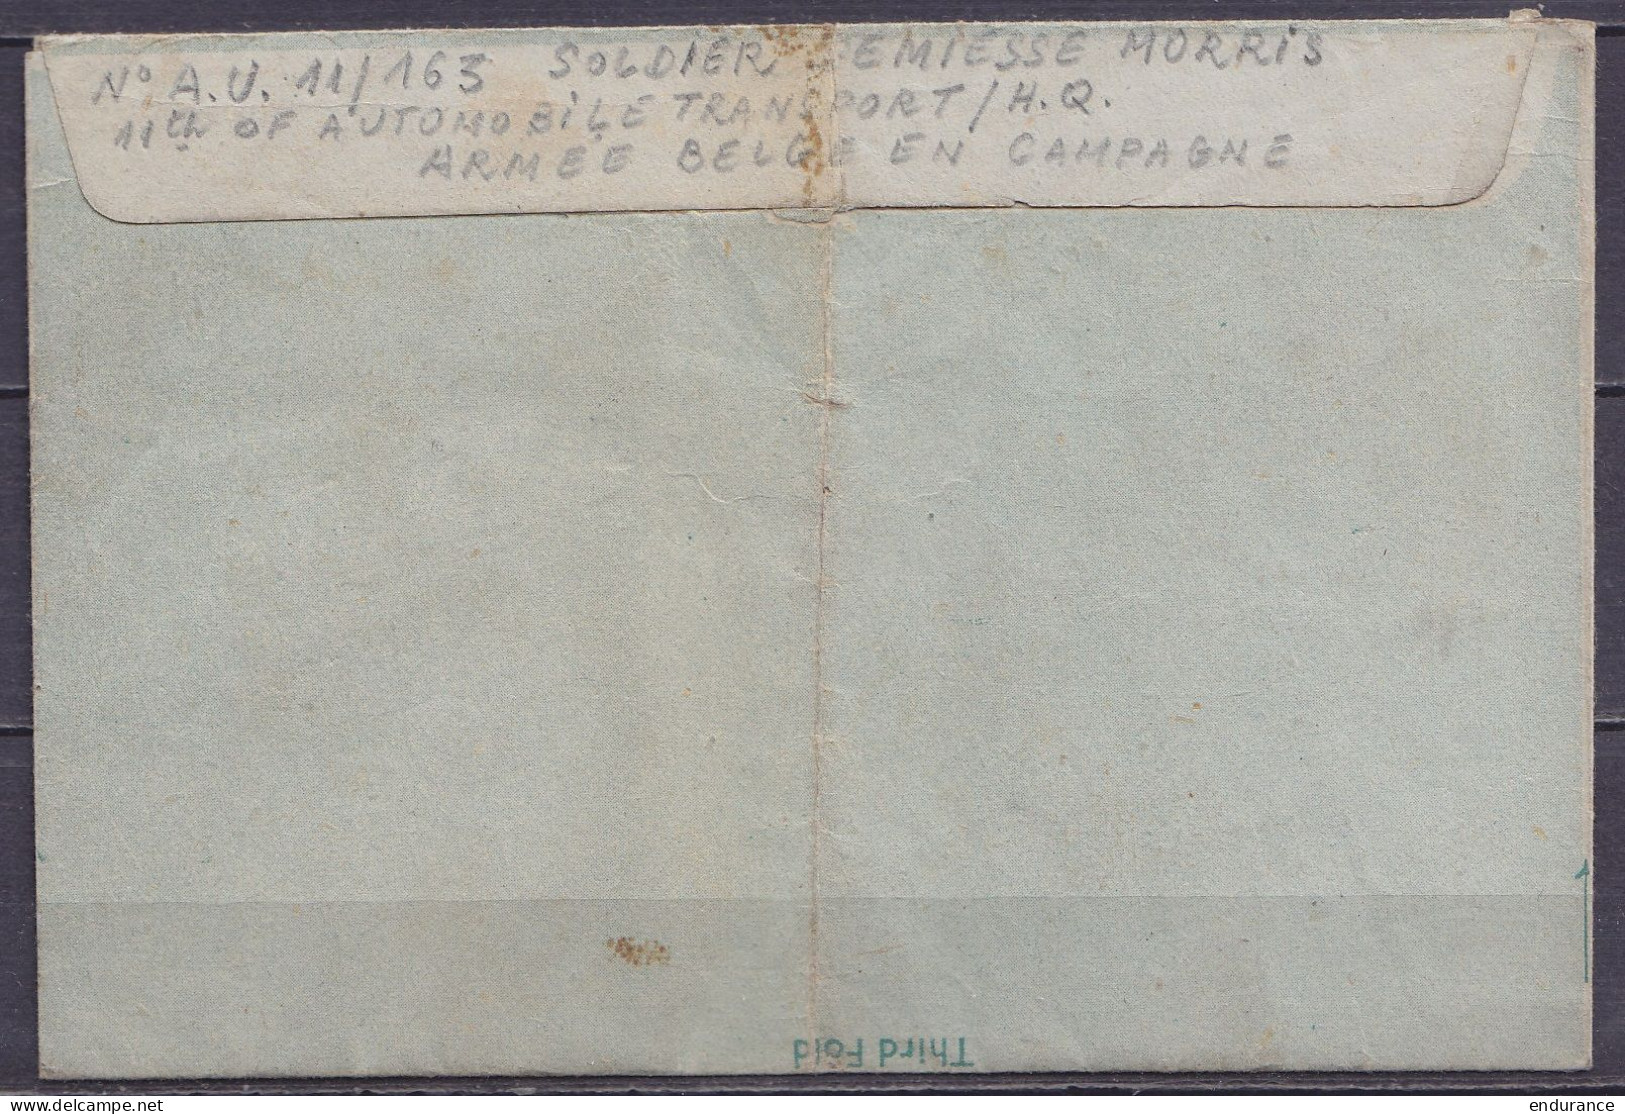 Aérogramme "Navy Army & Air Force Institutes"" Letter Form" Posté En Mer Affr. N°528 Càd OOSTENDE /21-3-1945" D'un Milit - WW II (Covers & Documents)